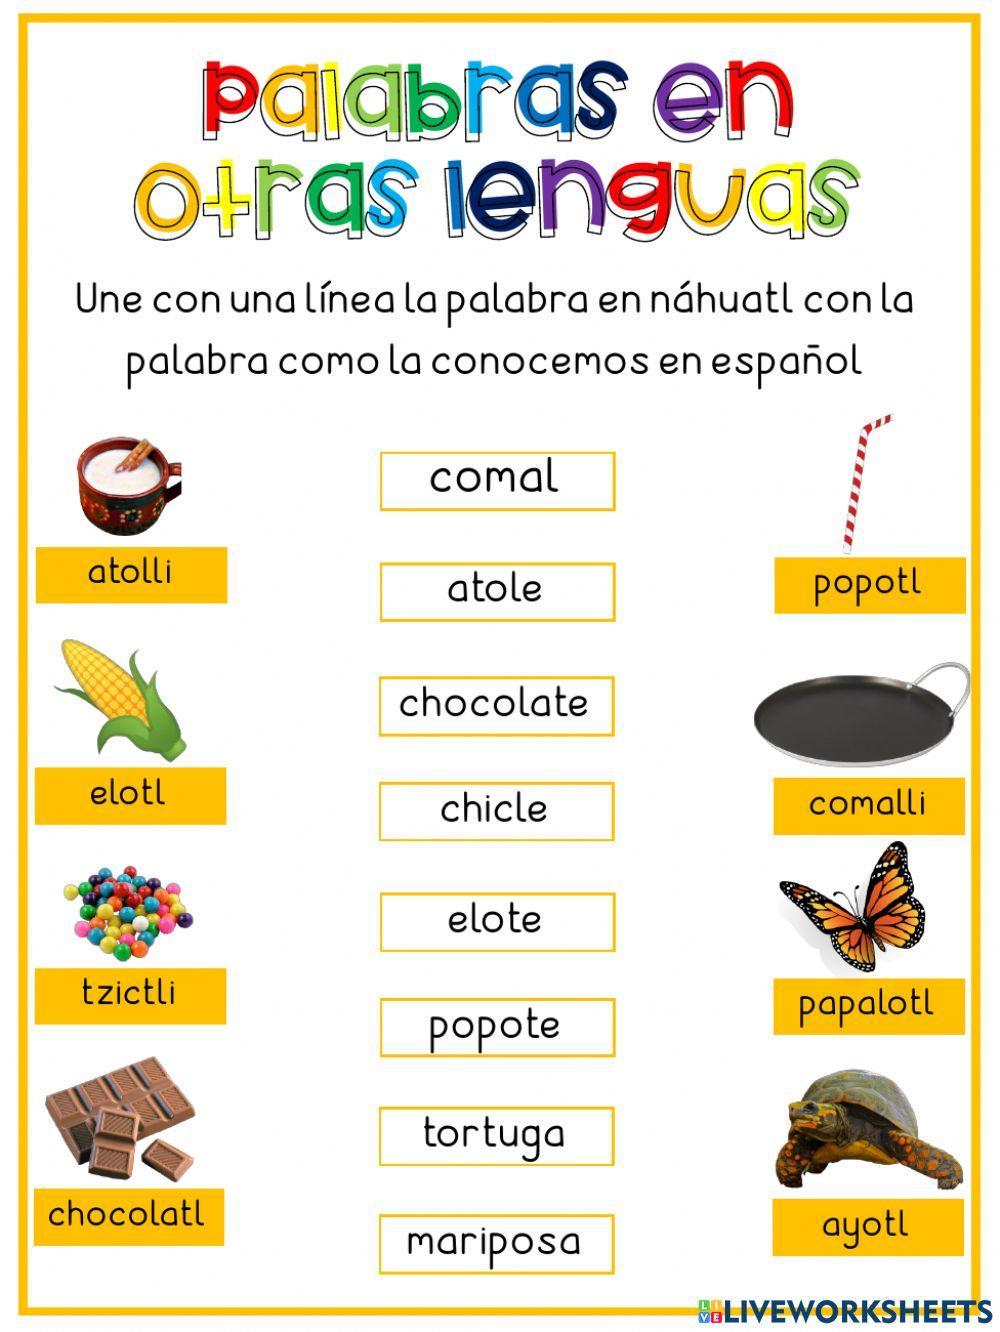 Palabras en lengua náhuatl